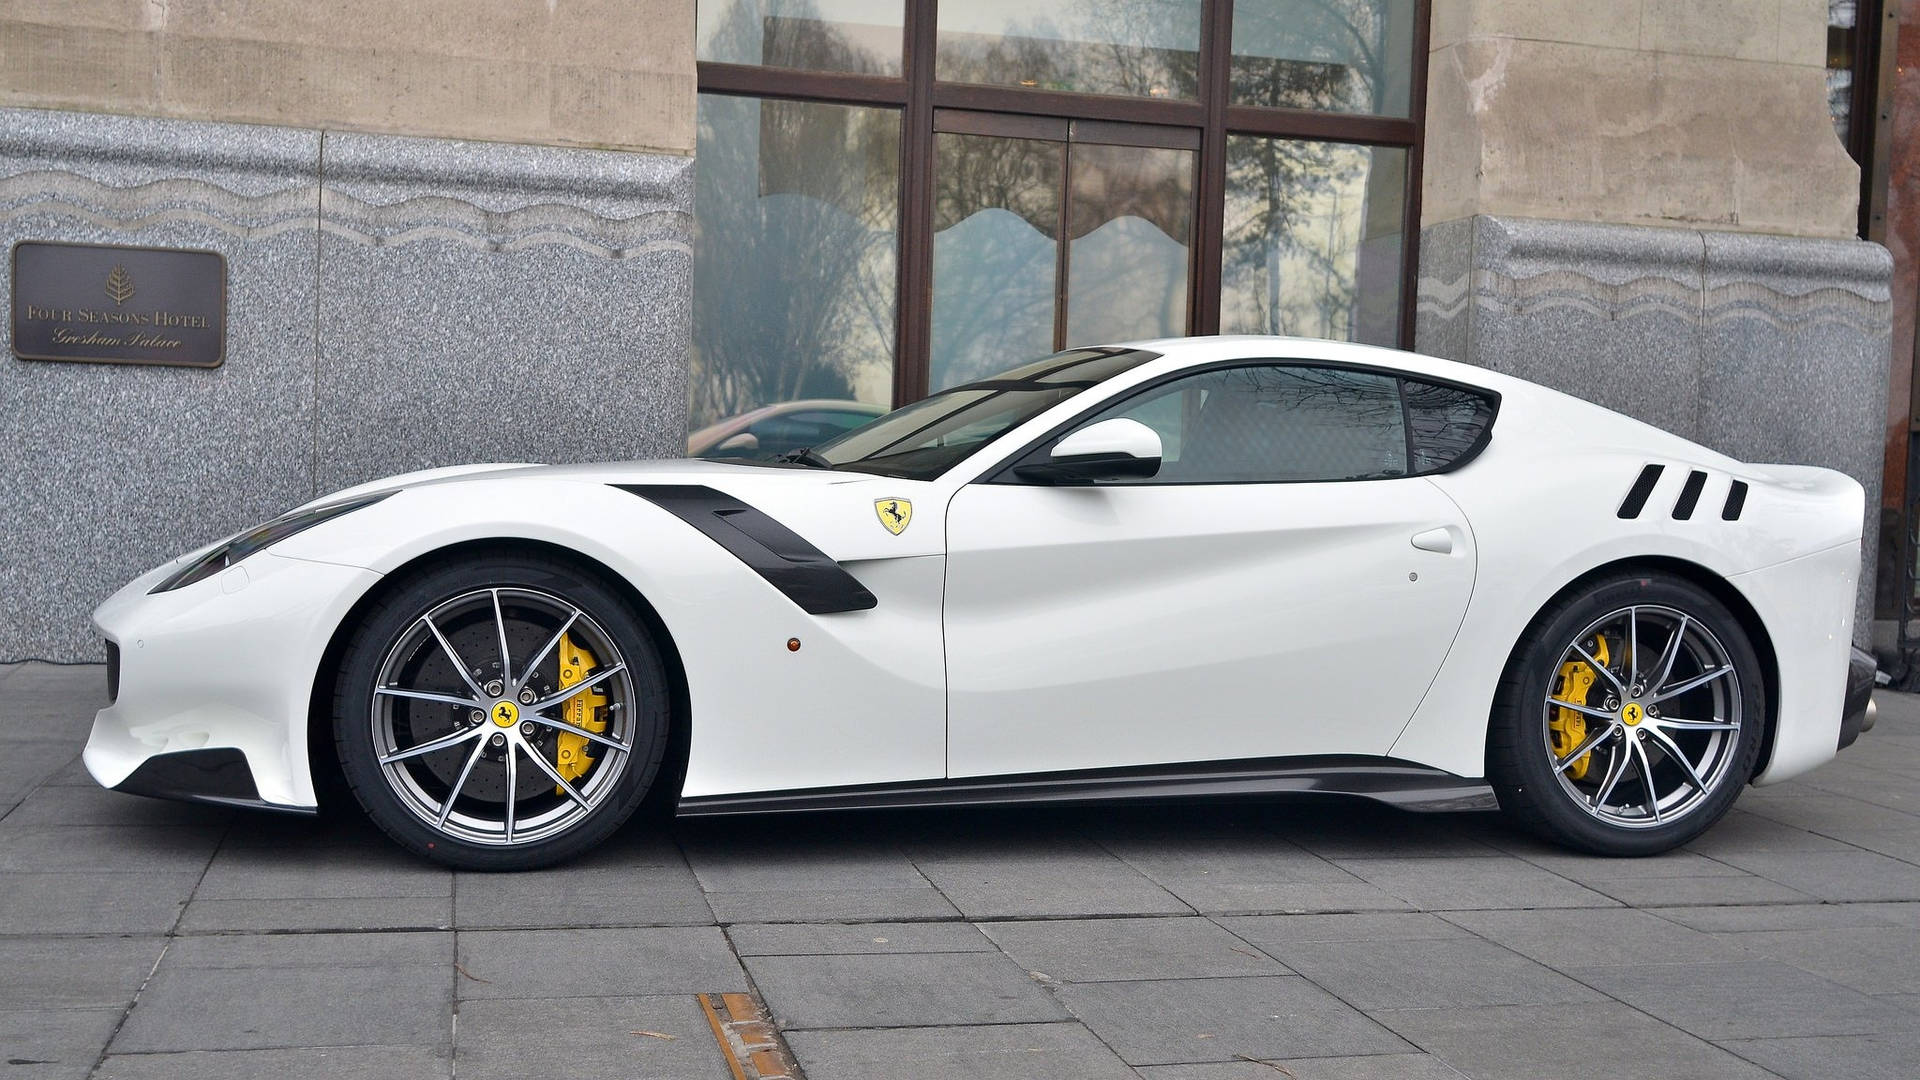 Classic White Ferrari Background